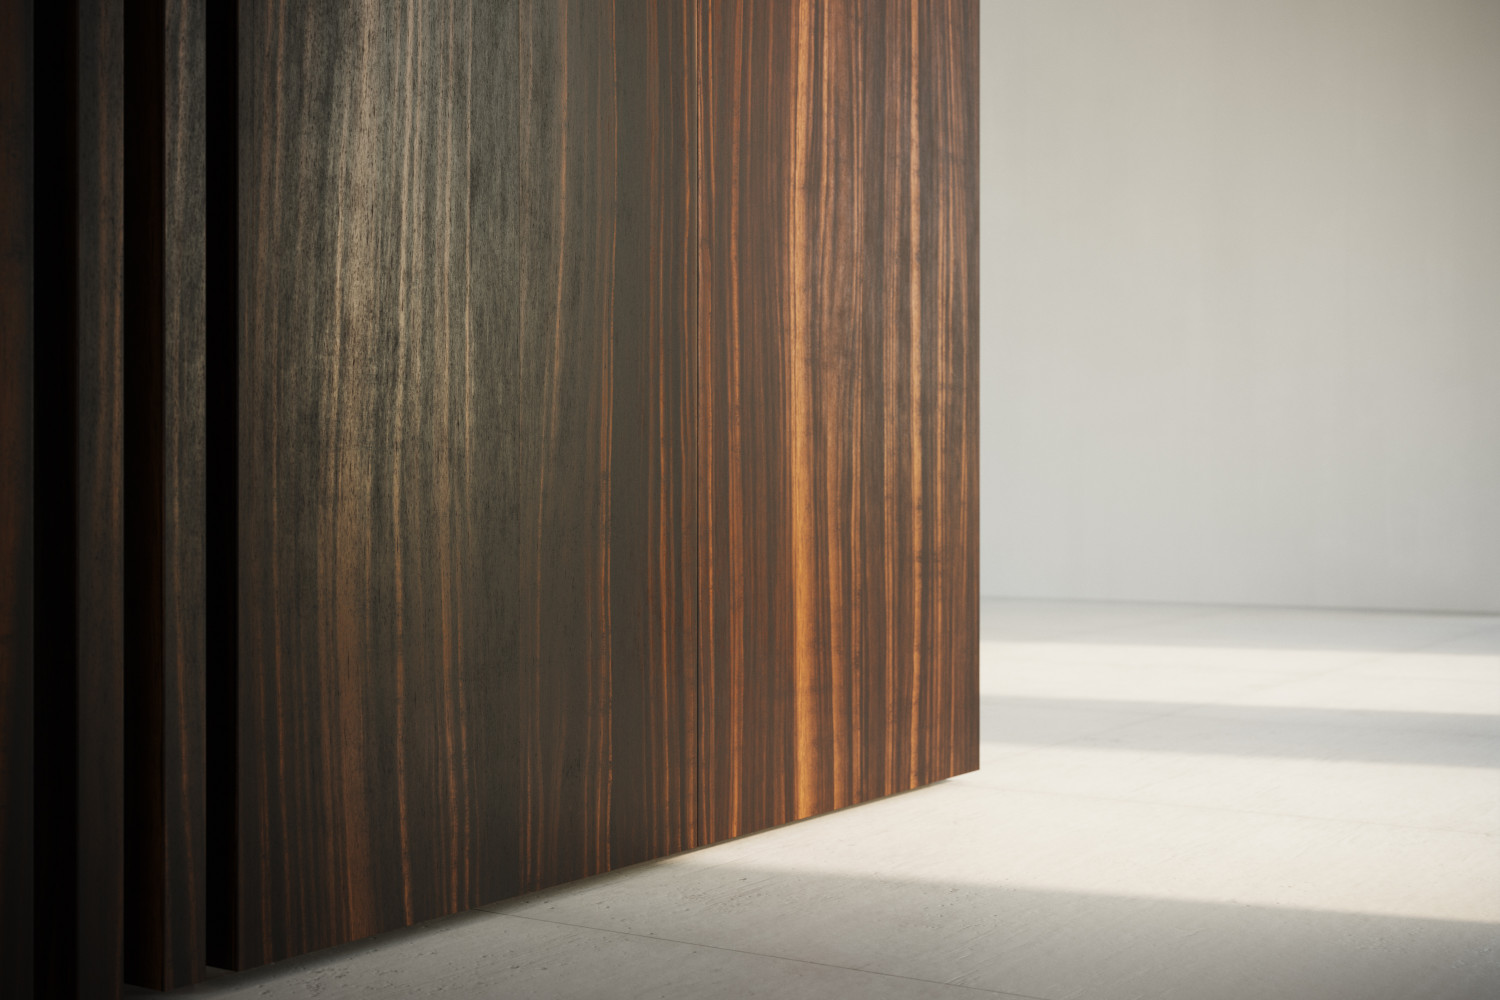 Ebony wood veneer texture